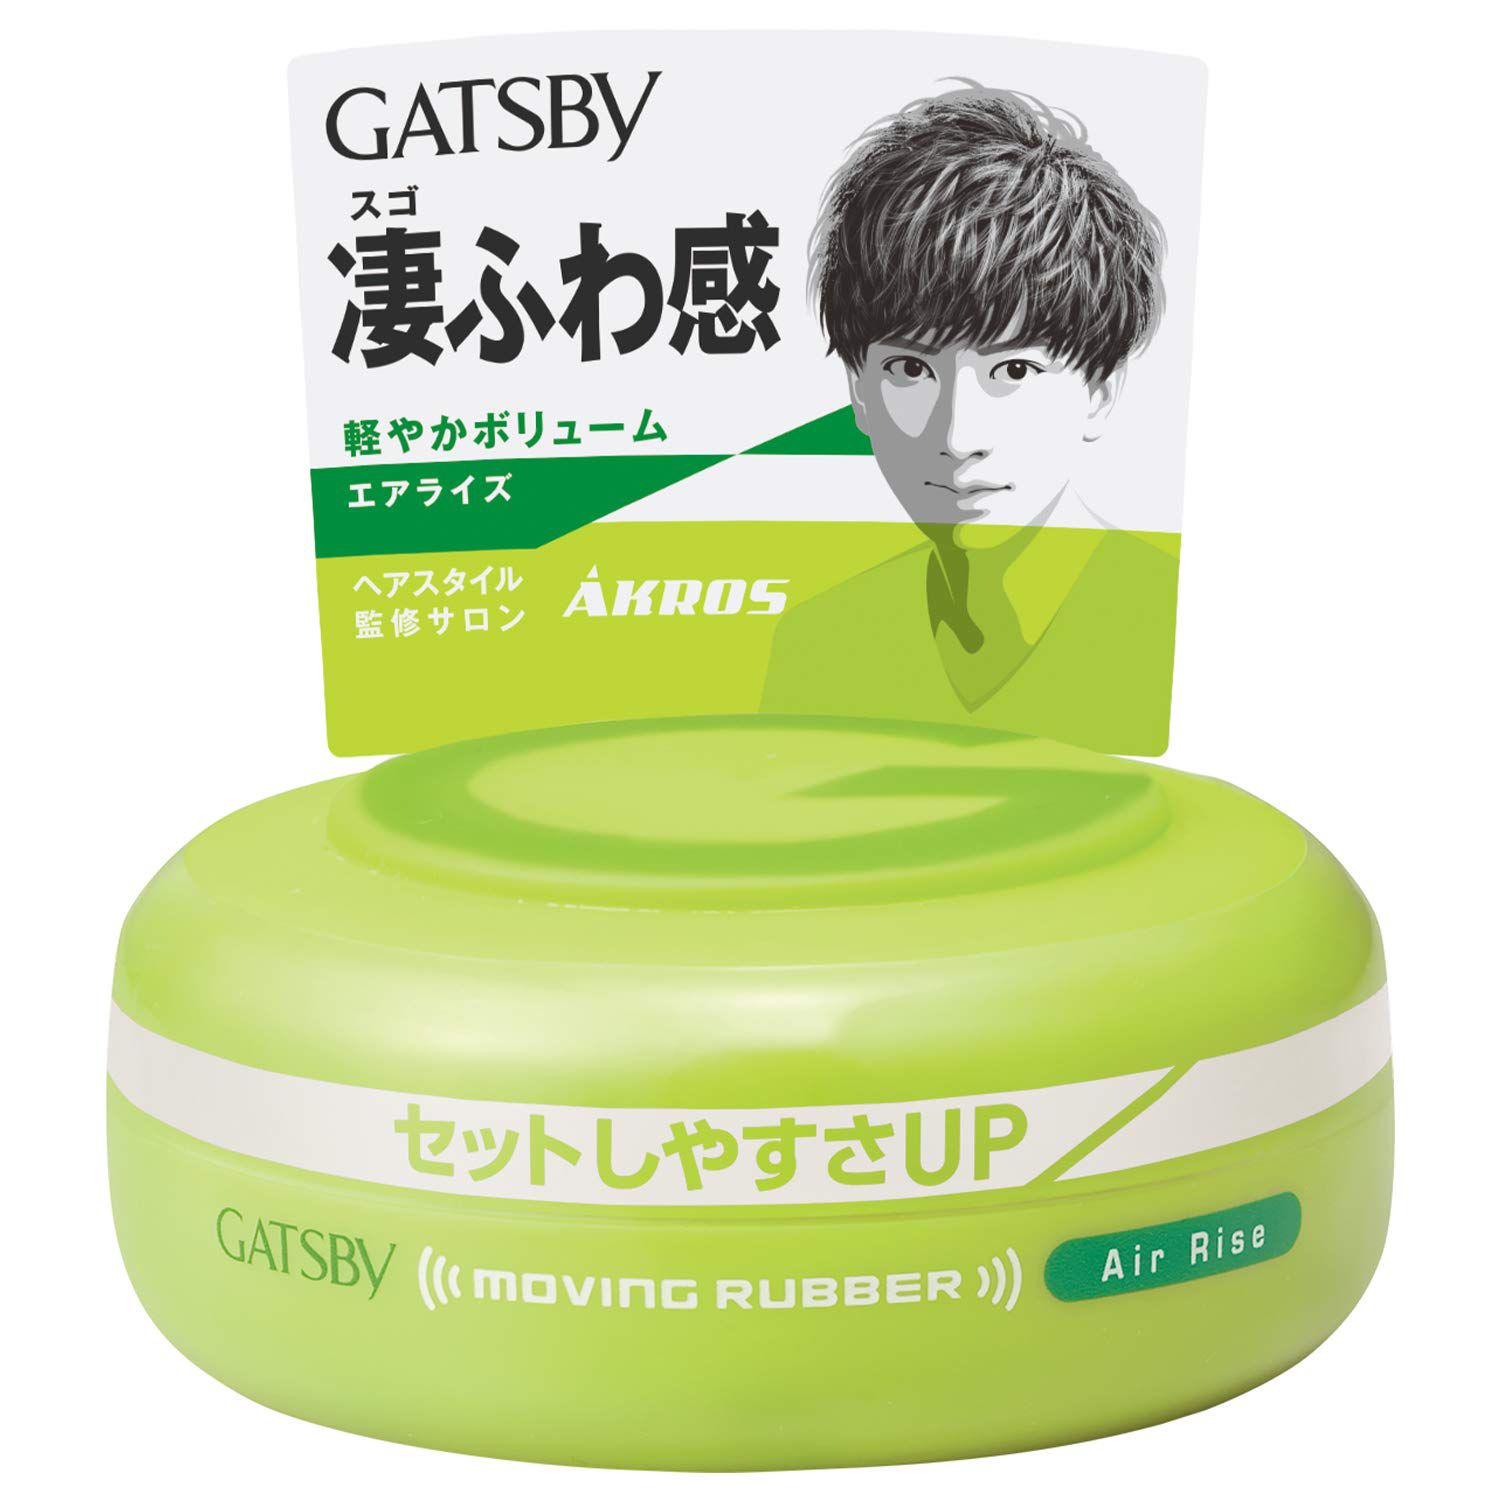 hair wax for a wet look, green tub